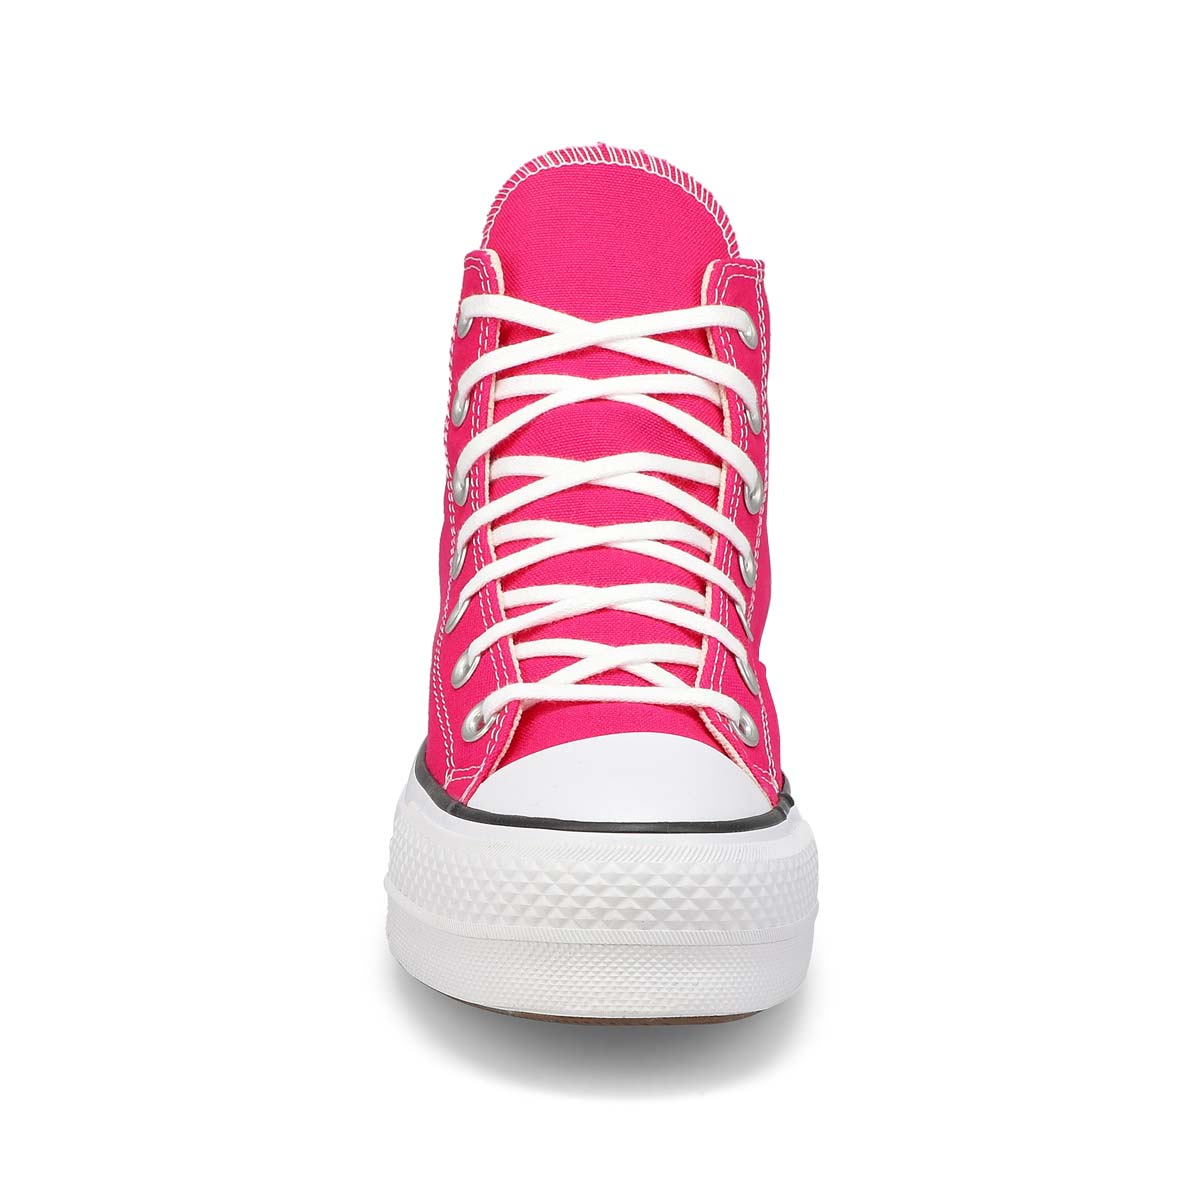 Women's Chuck Taylor All Star Lift Hi Top Platform Sneaker - Cerise Pink/White/Black